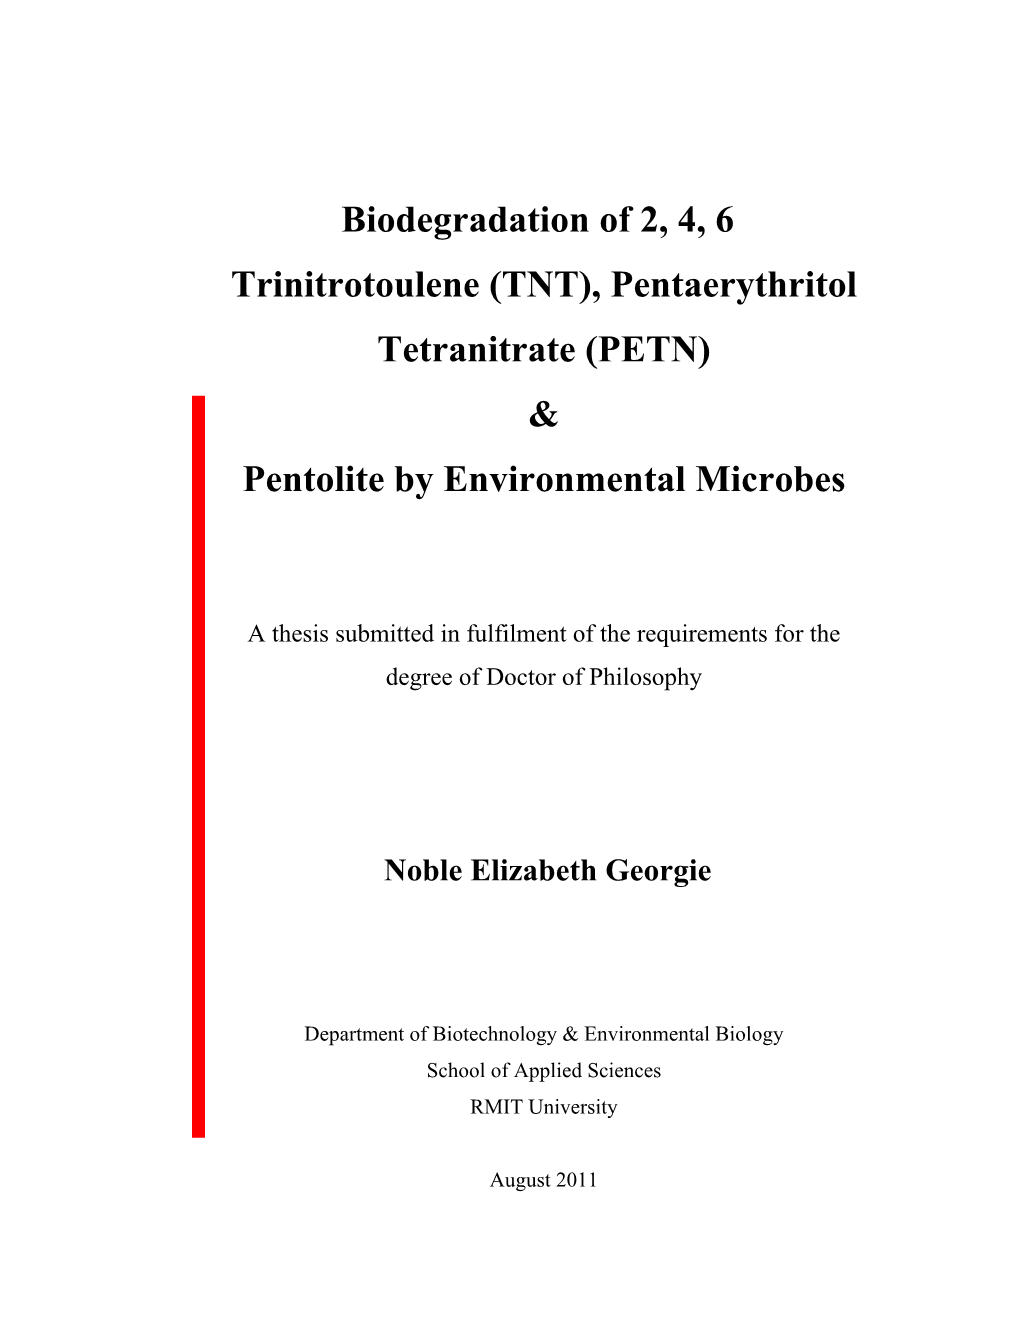 Pentaerythritol Tetranitrate (PETN) & Pentolite by Environmental Microbes